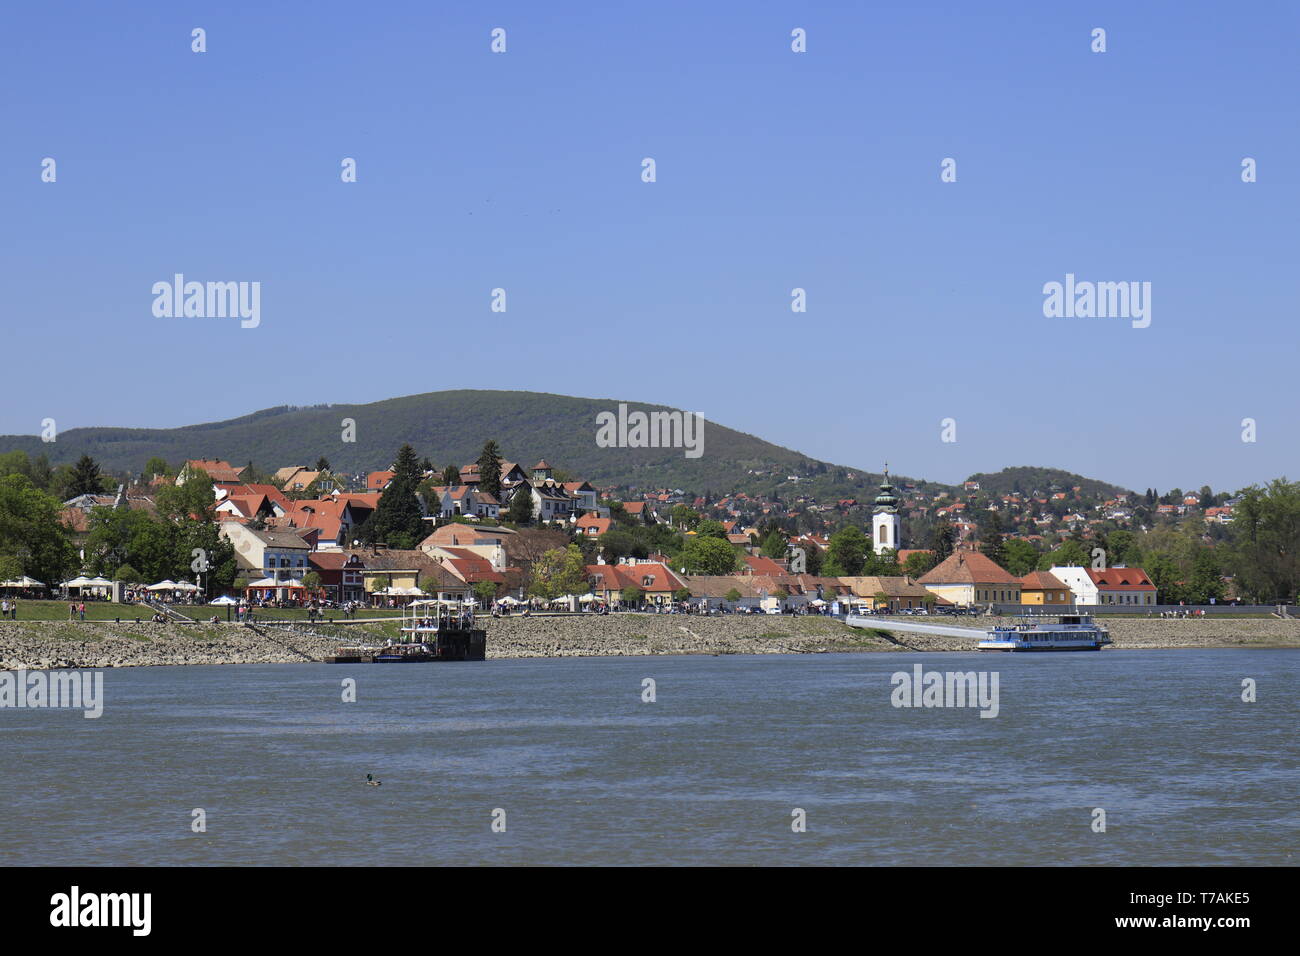 Szentendre village skyline seen from across the river, Hungary Stock Photo